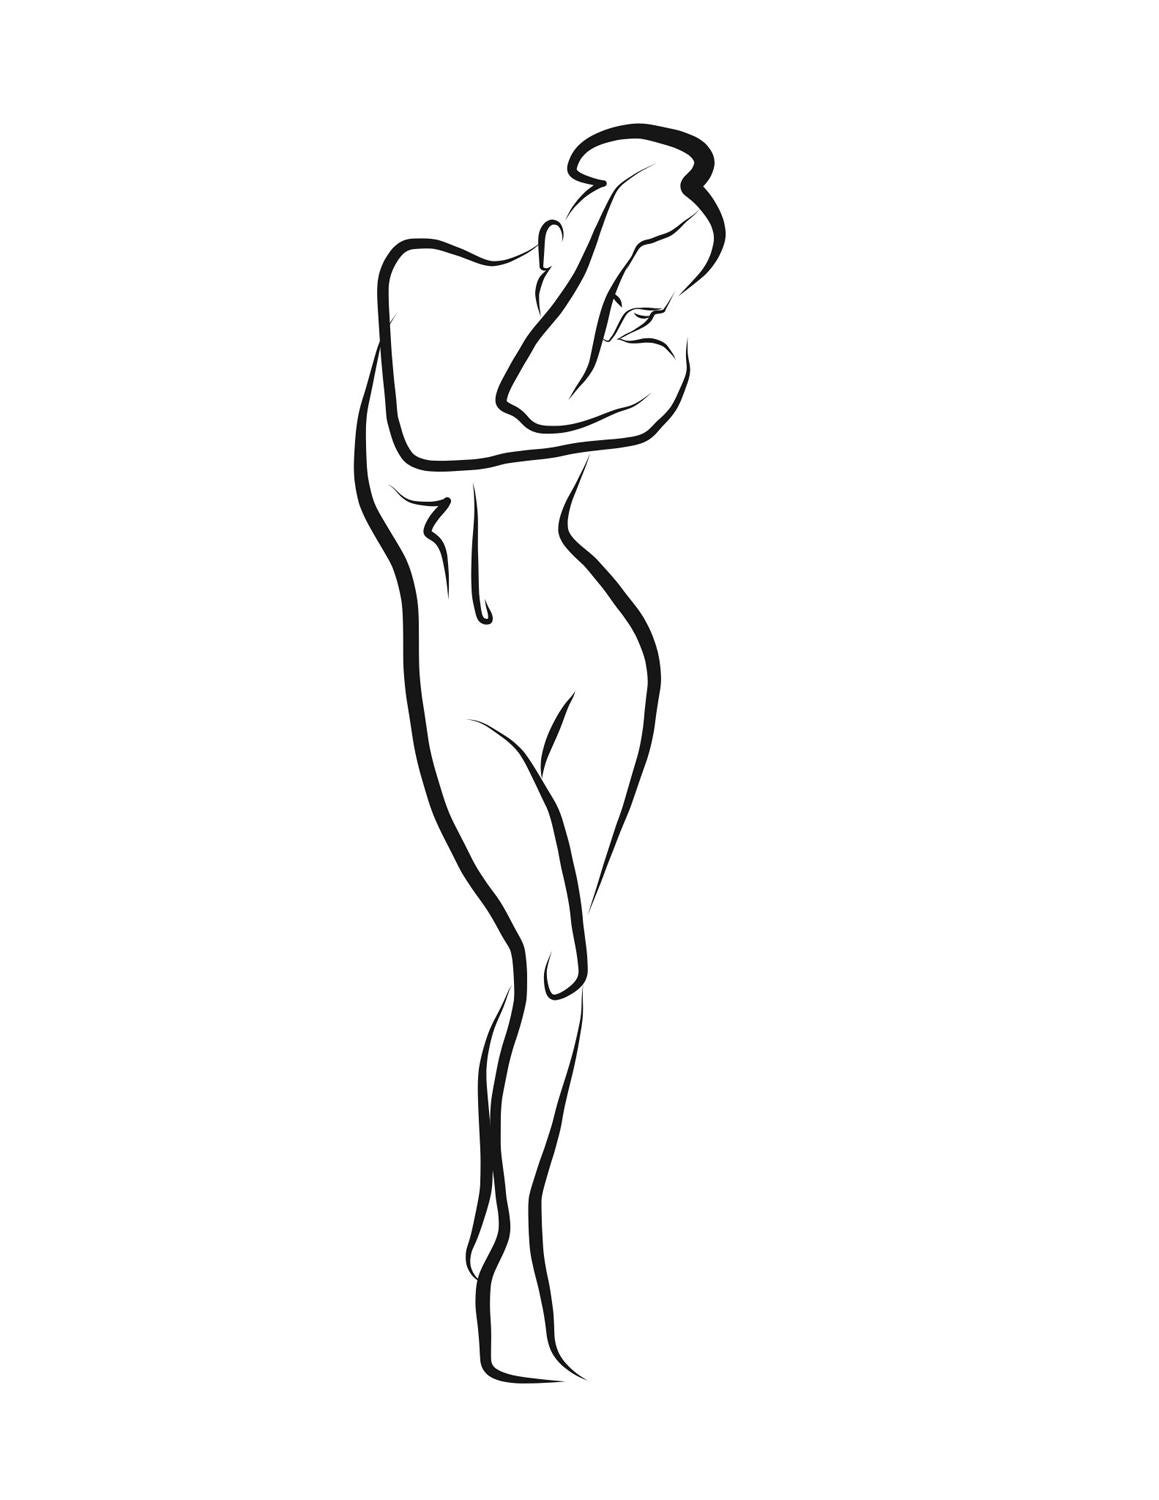 Haiku #26, 1/50 - Digital Vector Drawing Shy Standing Female Nude Woman Figure